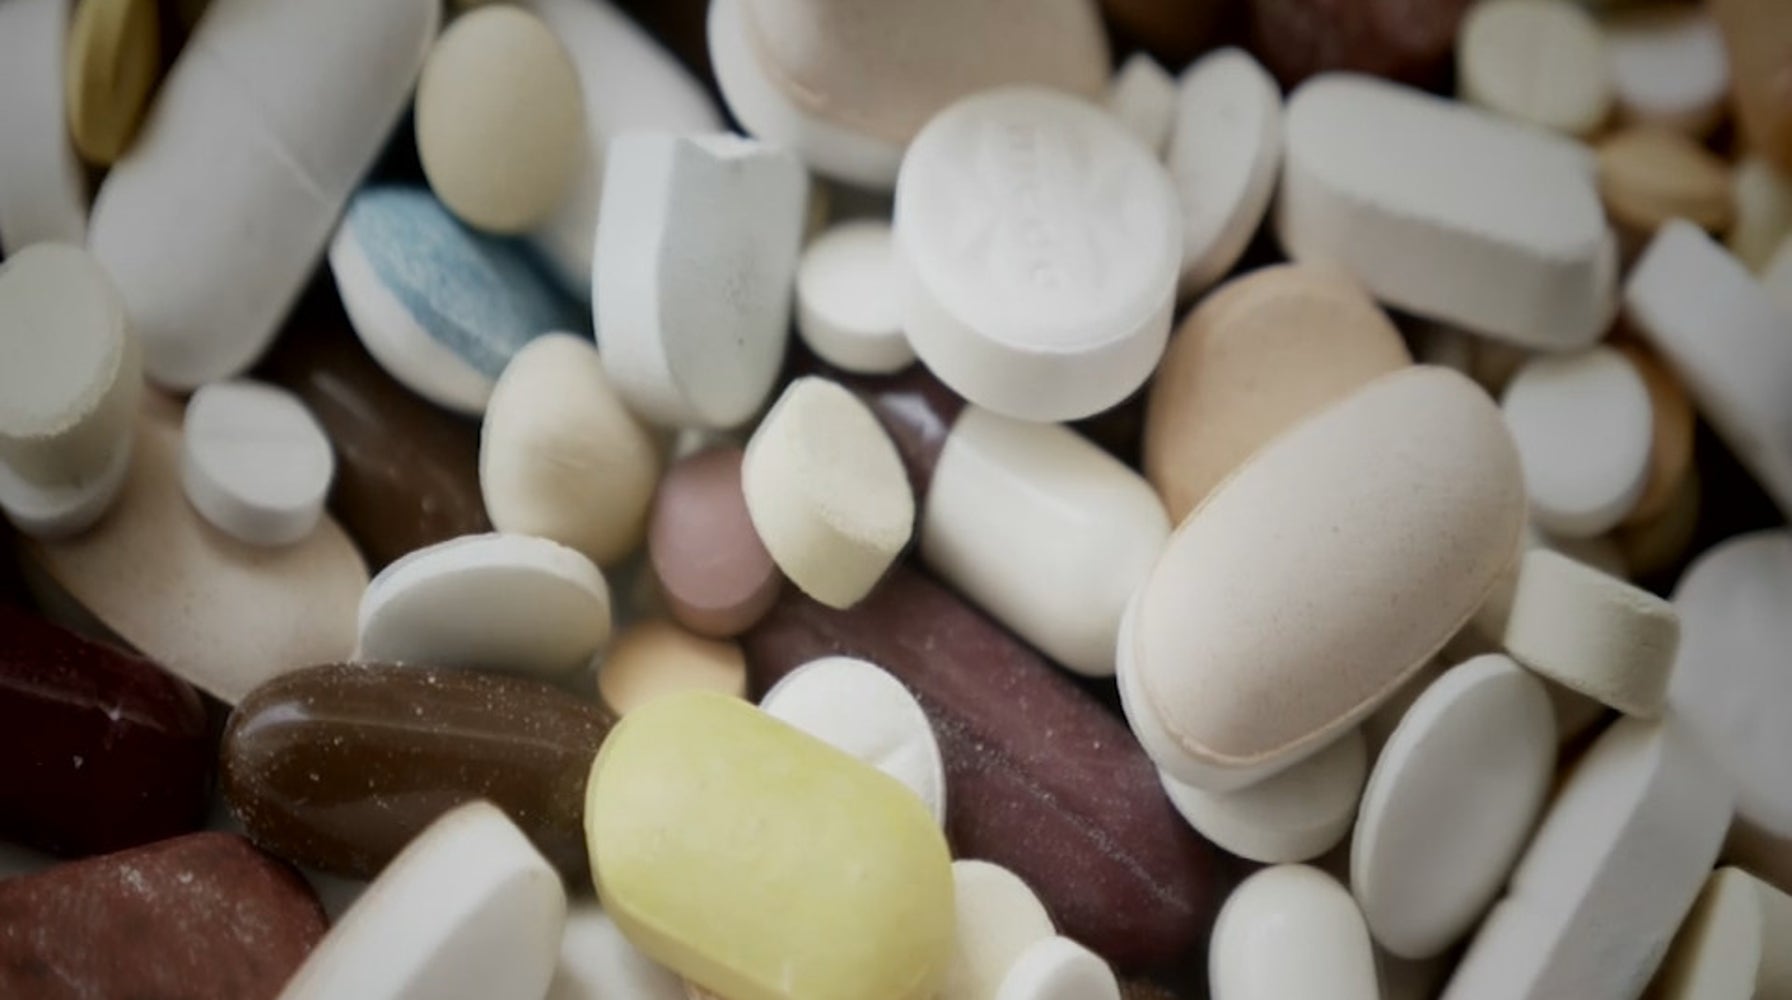 Drug Seizure Reveals Alarming Increase in Methamphetamine Presence in the US